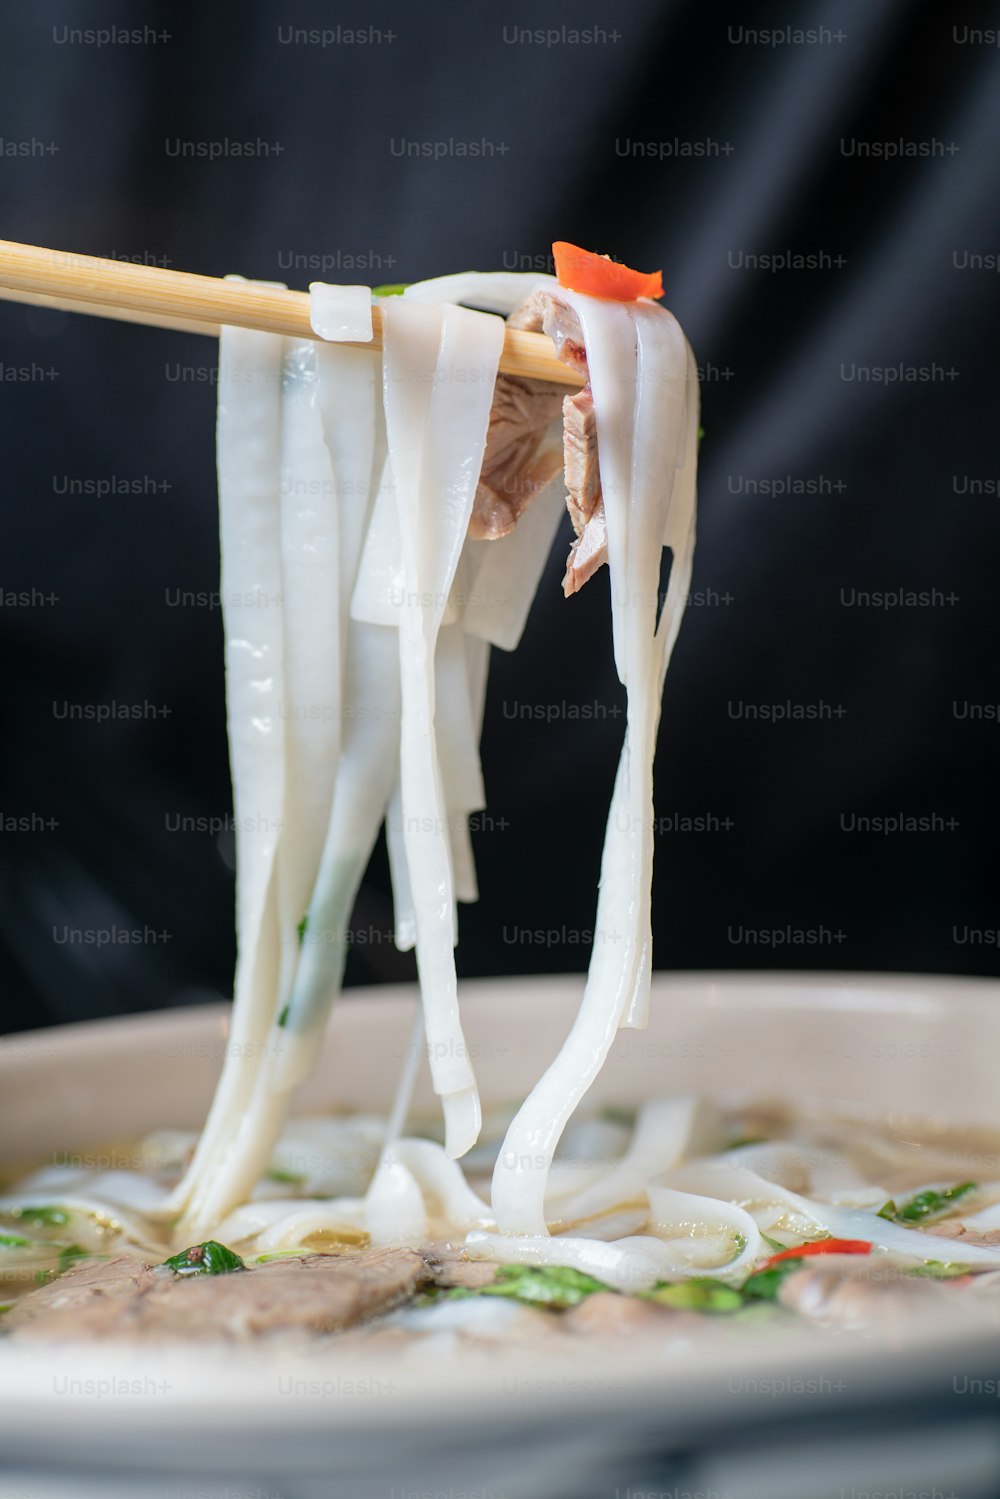 a close up of a bowl of noodles with chopsticks